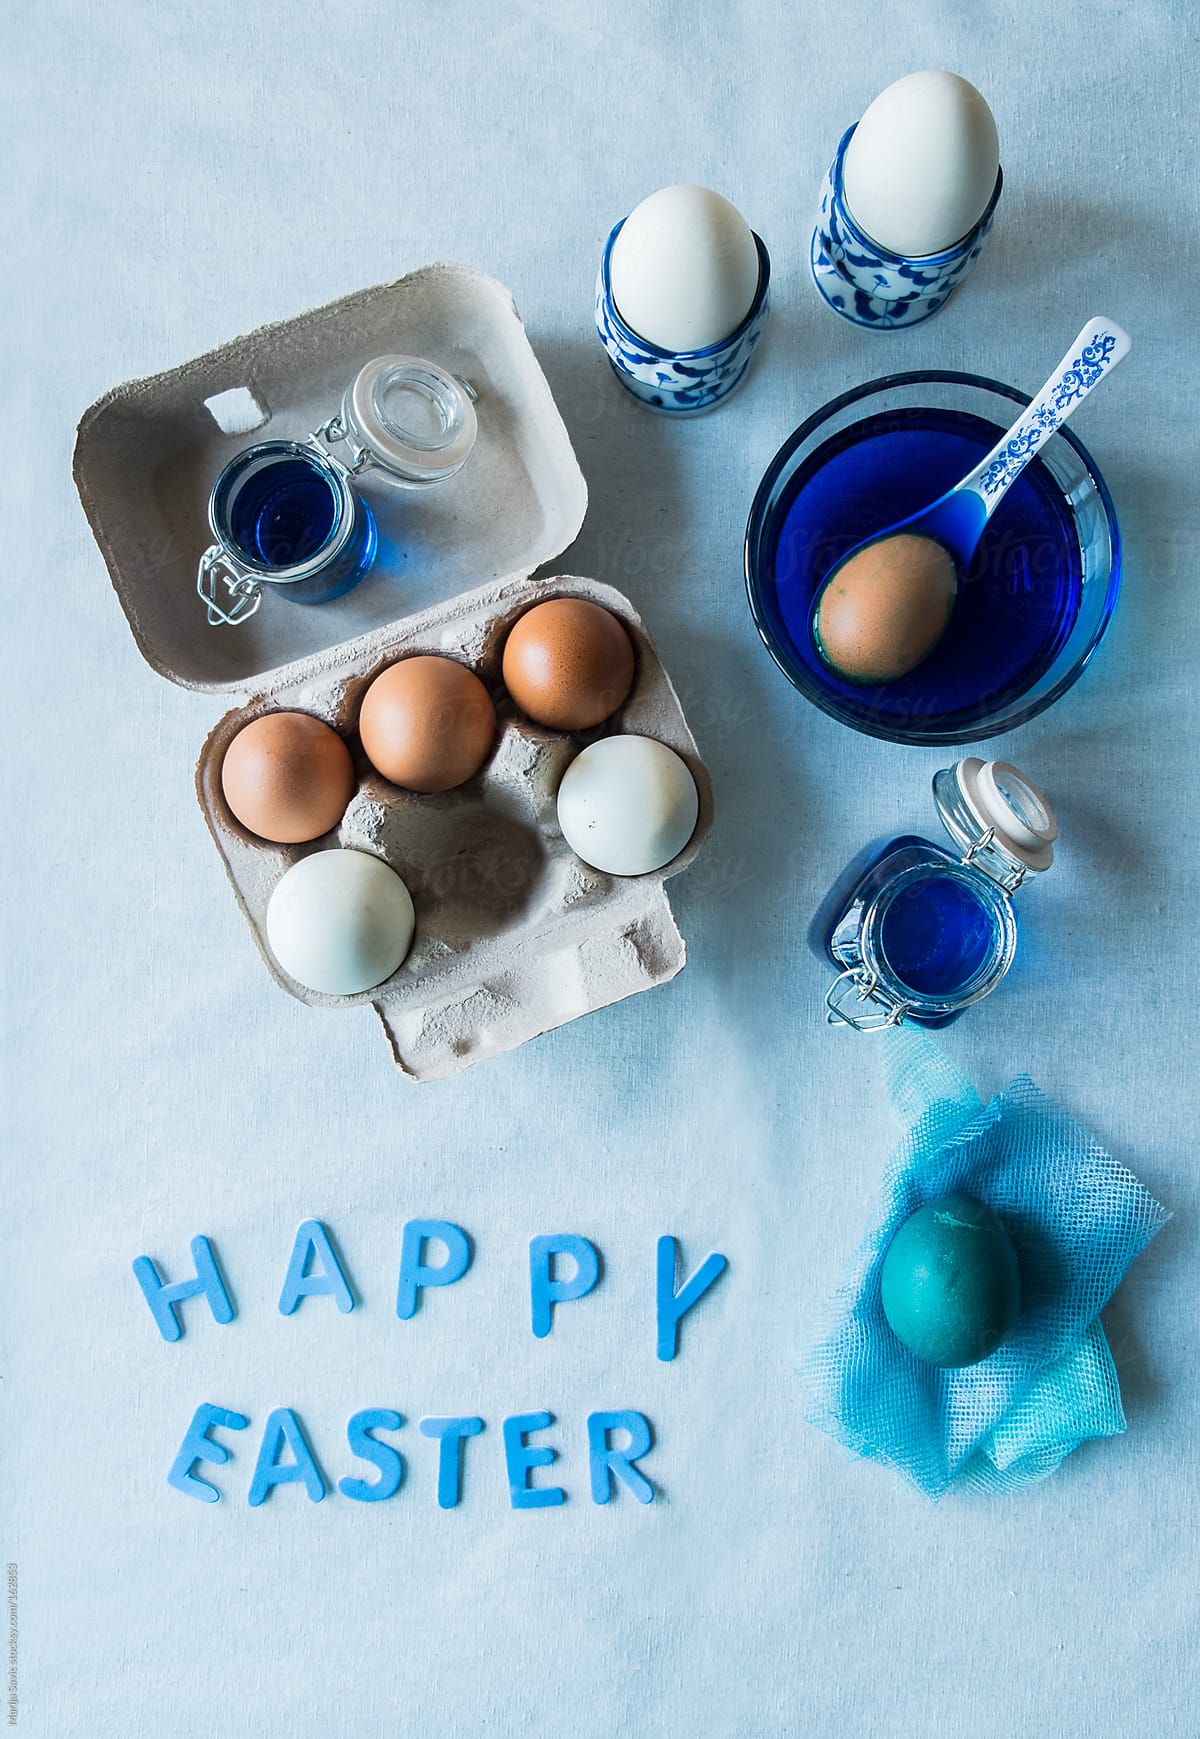 "Blue Colored Easter Eggs Set" by Stocksy Contributor "Marija Savic ...